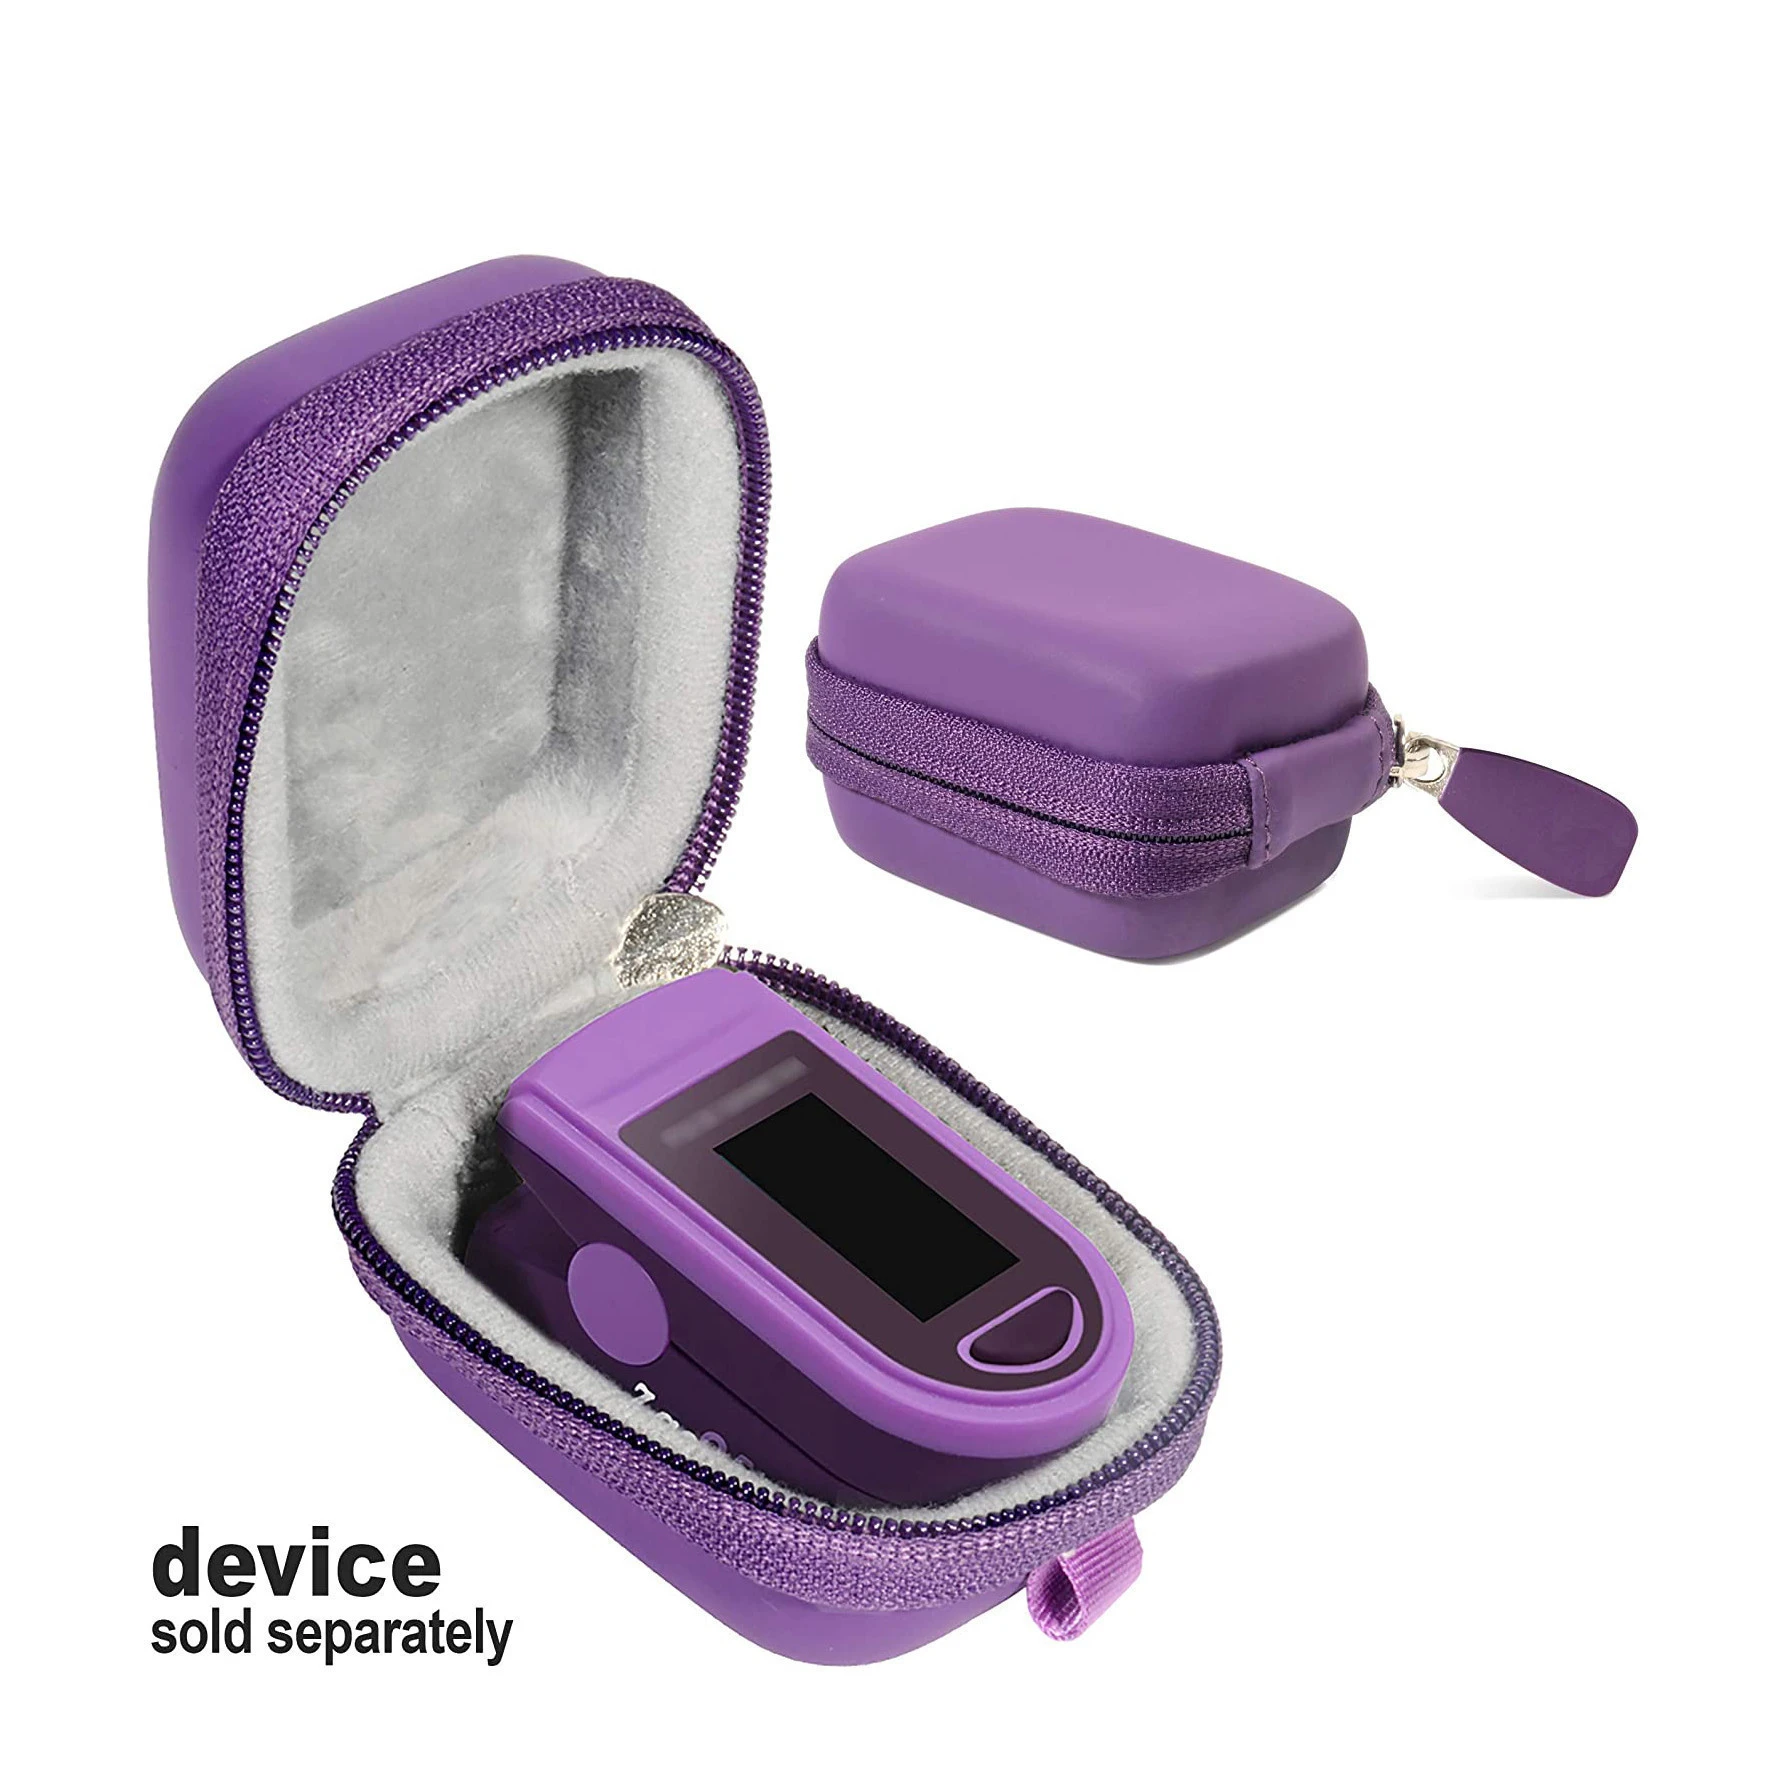 Hard EVA Travel Oximeter ProtecTive Case Bag, Carry Pouch Box for Fingertip Pulse Oximeter